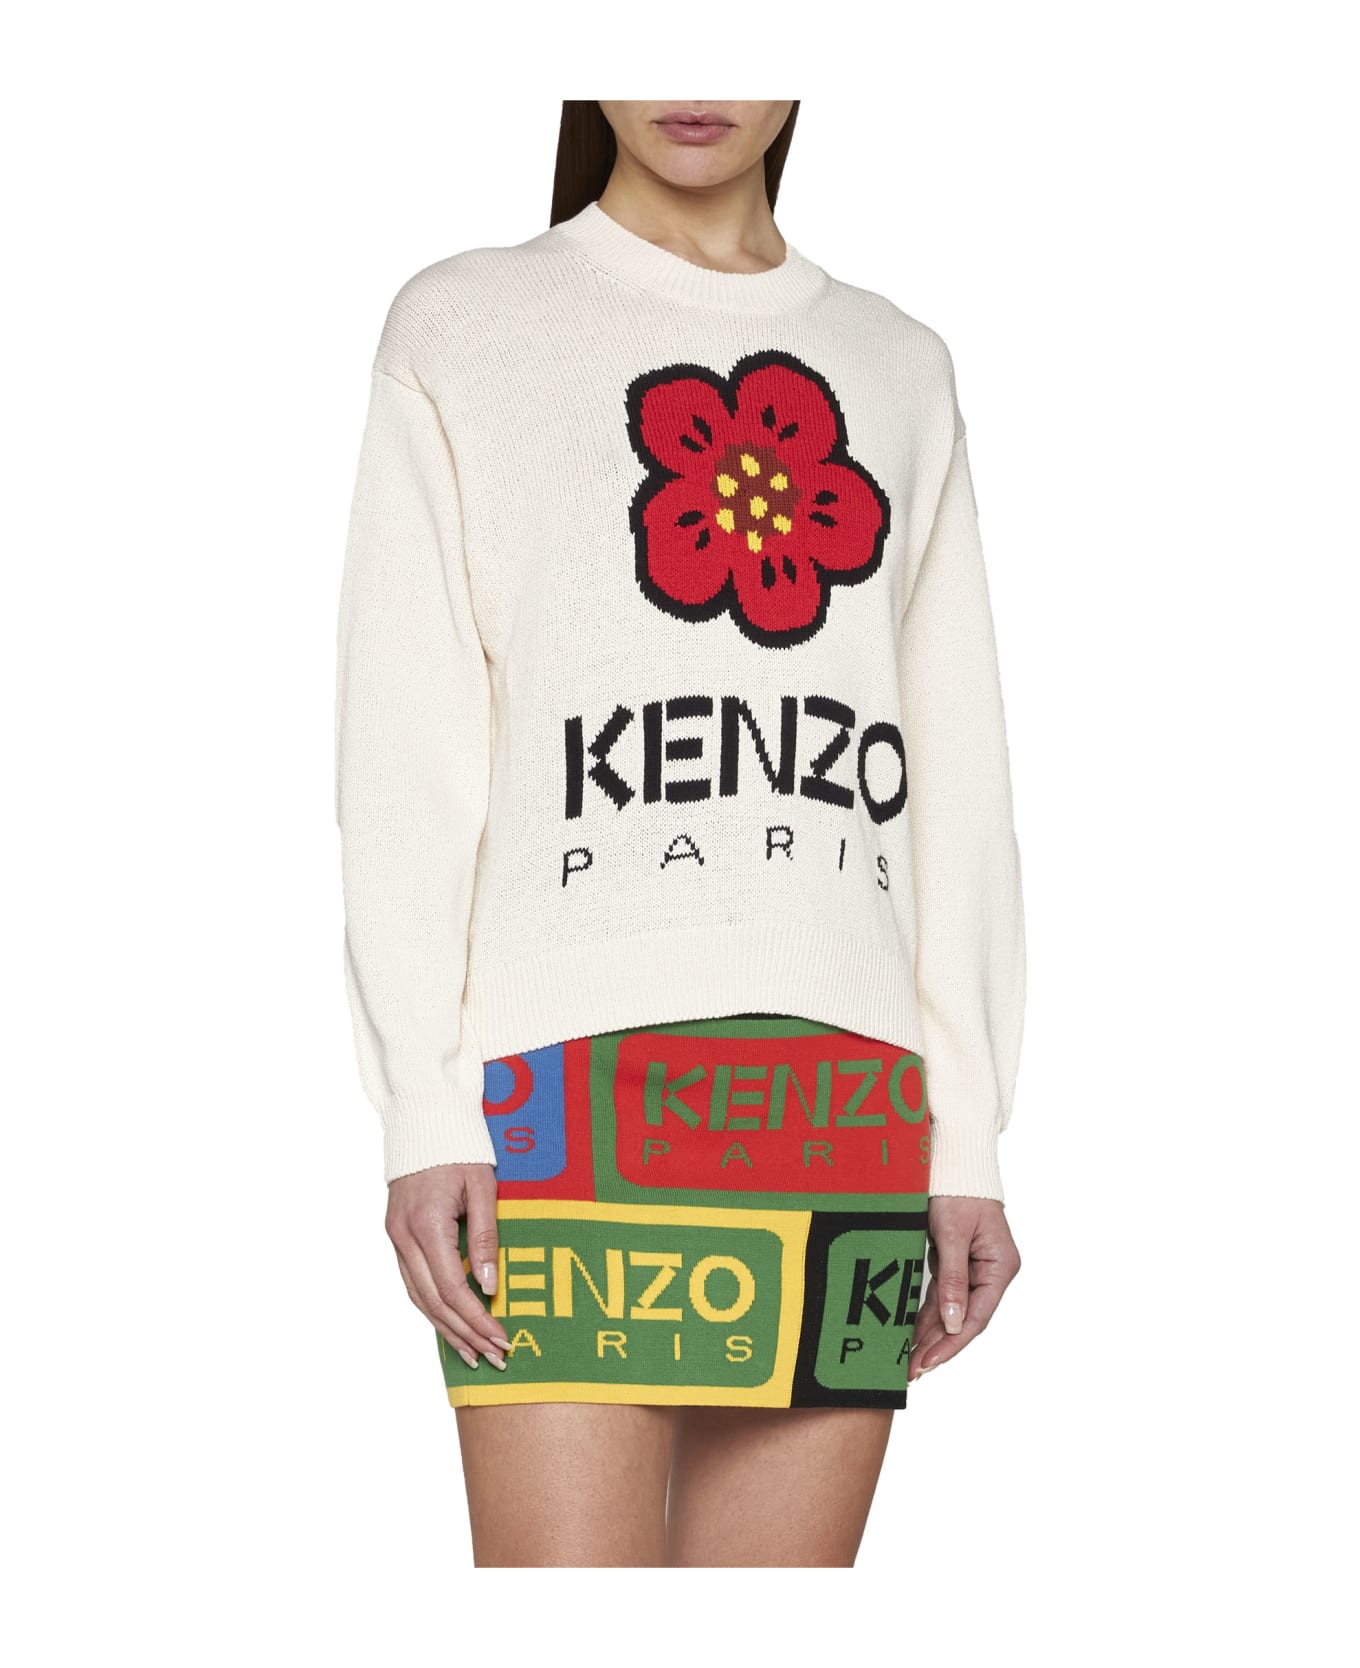 Kenzo Long Sleeve Crew-neck Sweater - Ivory